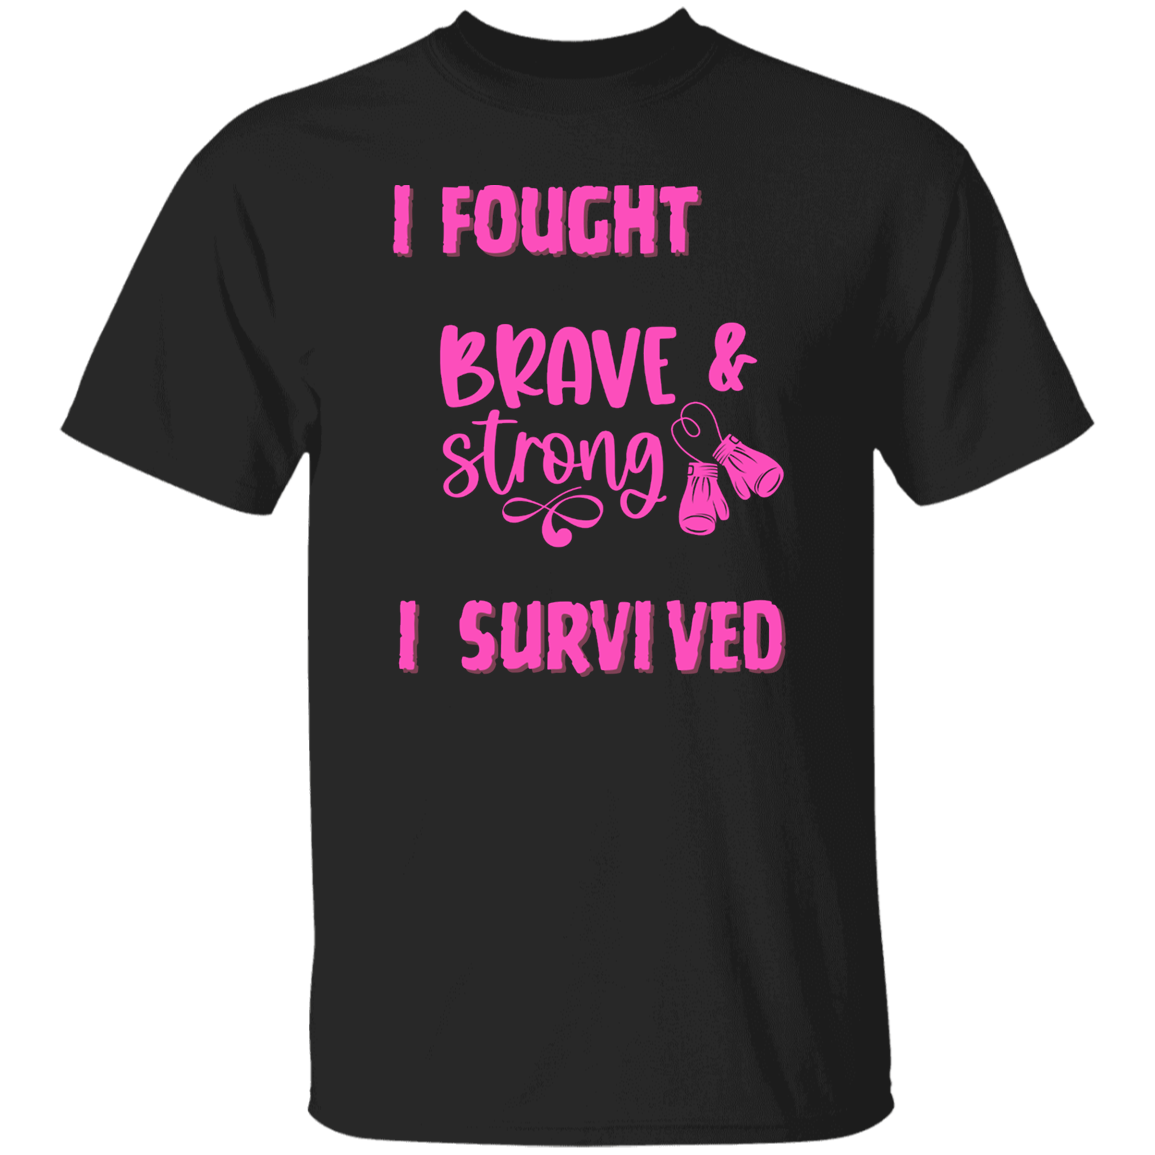 I Survived Short Sleeve Shirt